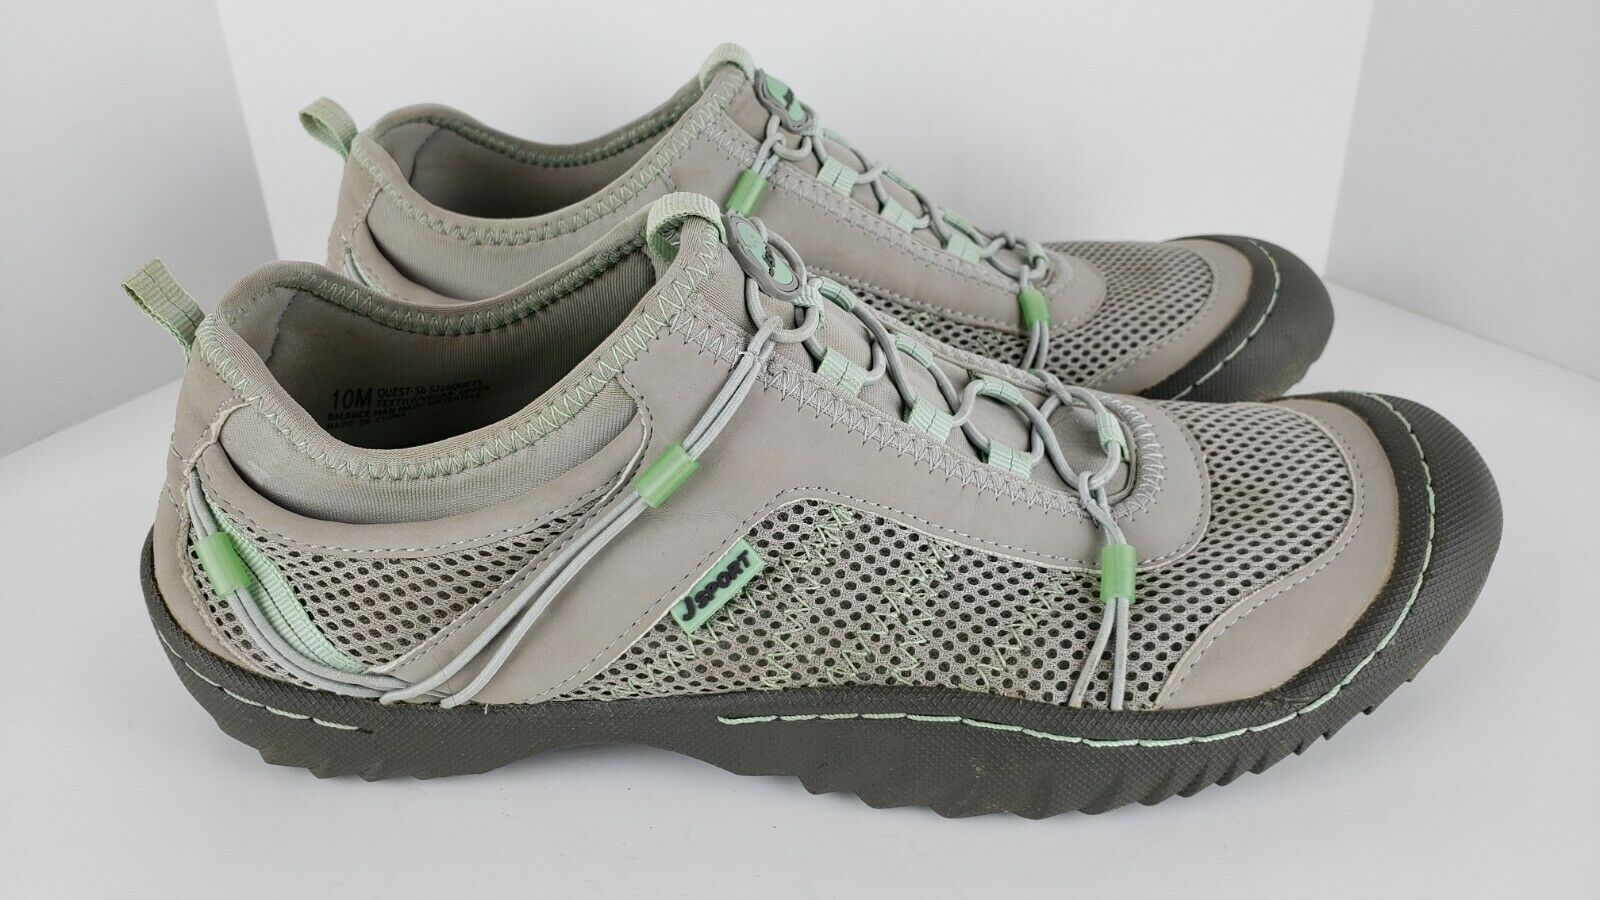 J Sport Jambu Women’s Water Shoes Sandals 'Size 10 M' Quest Gray Green Walking